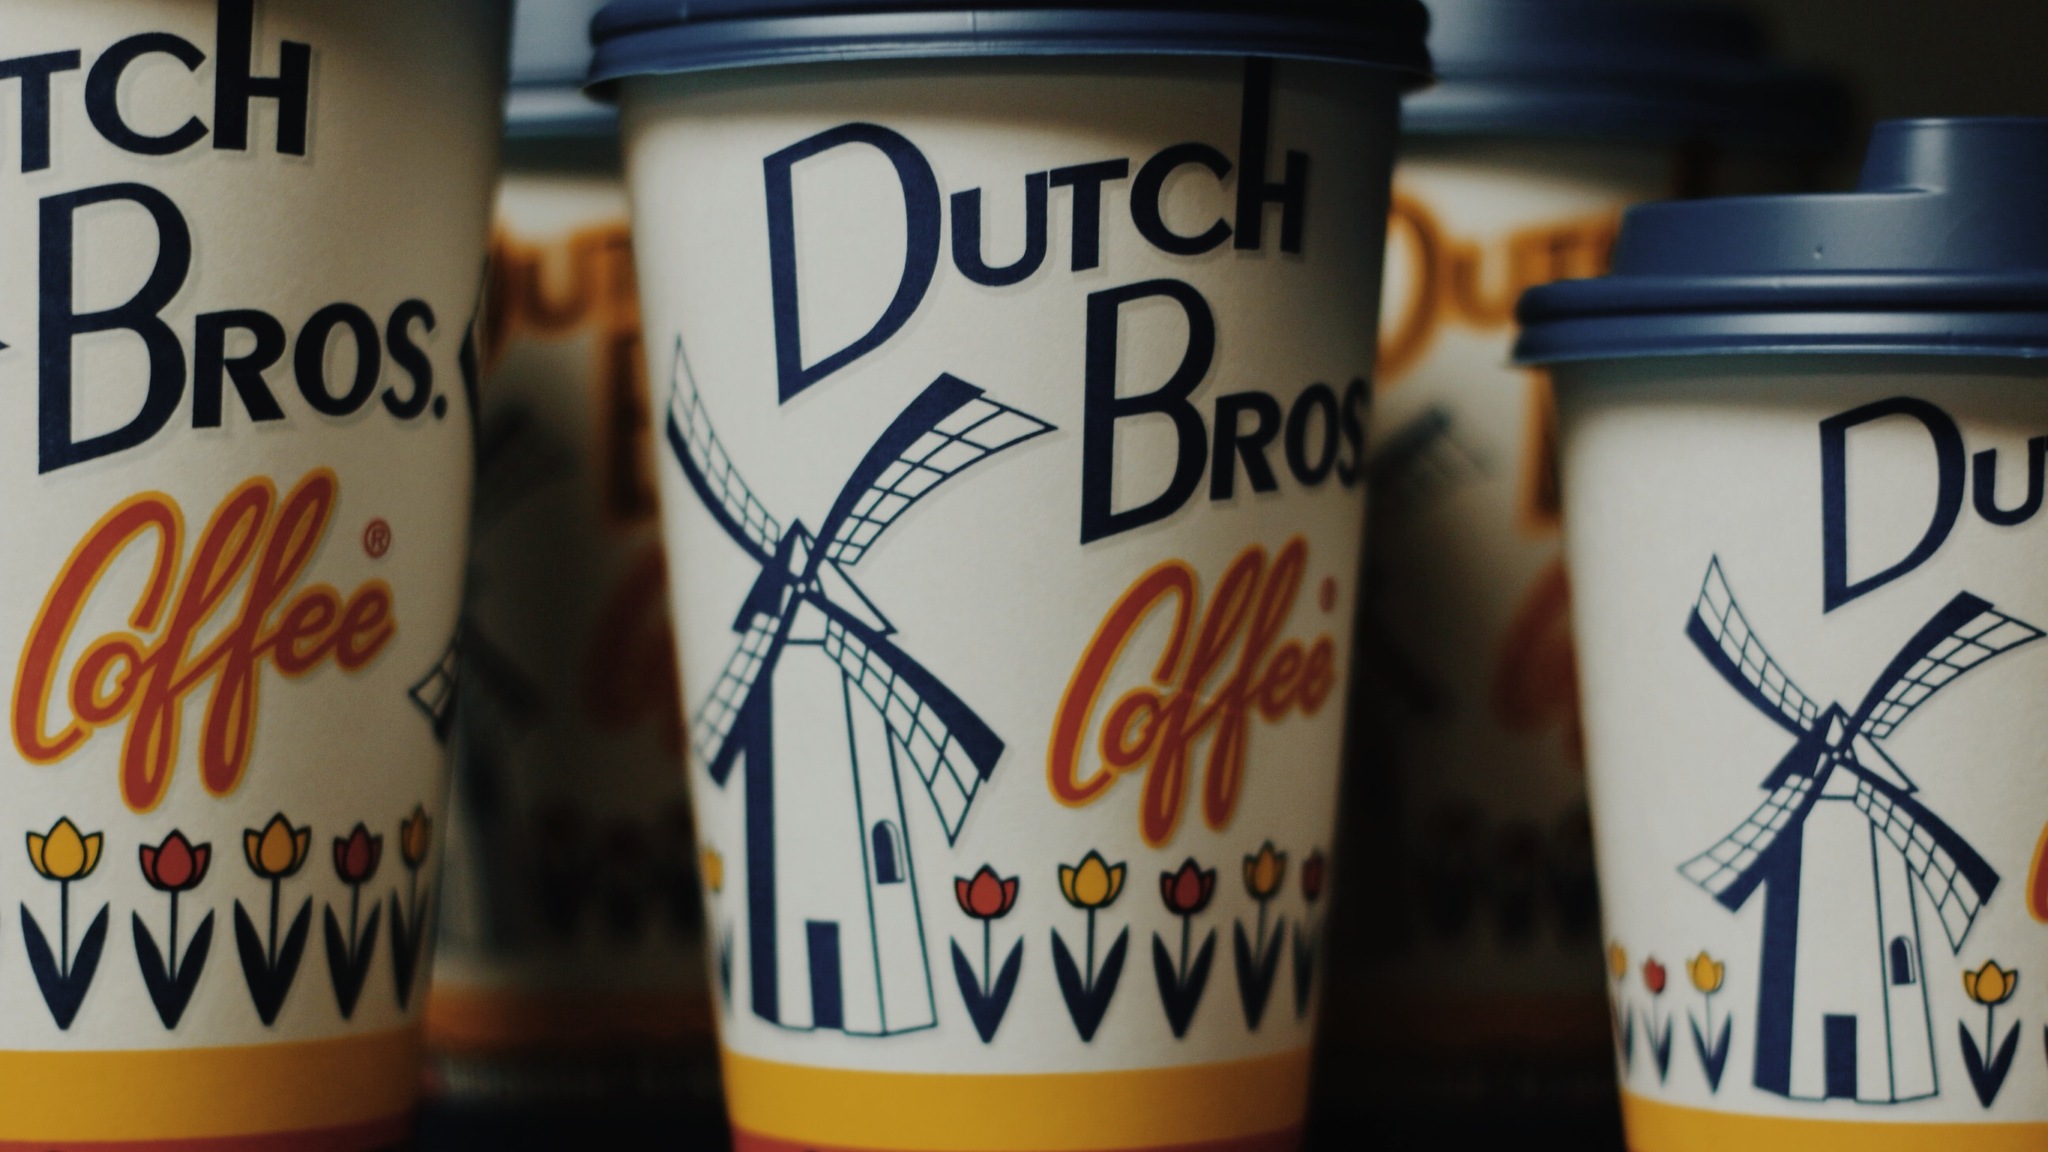 dutch bros coffee on Tumblr